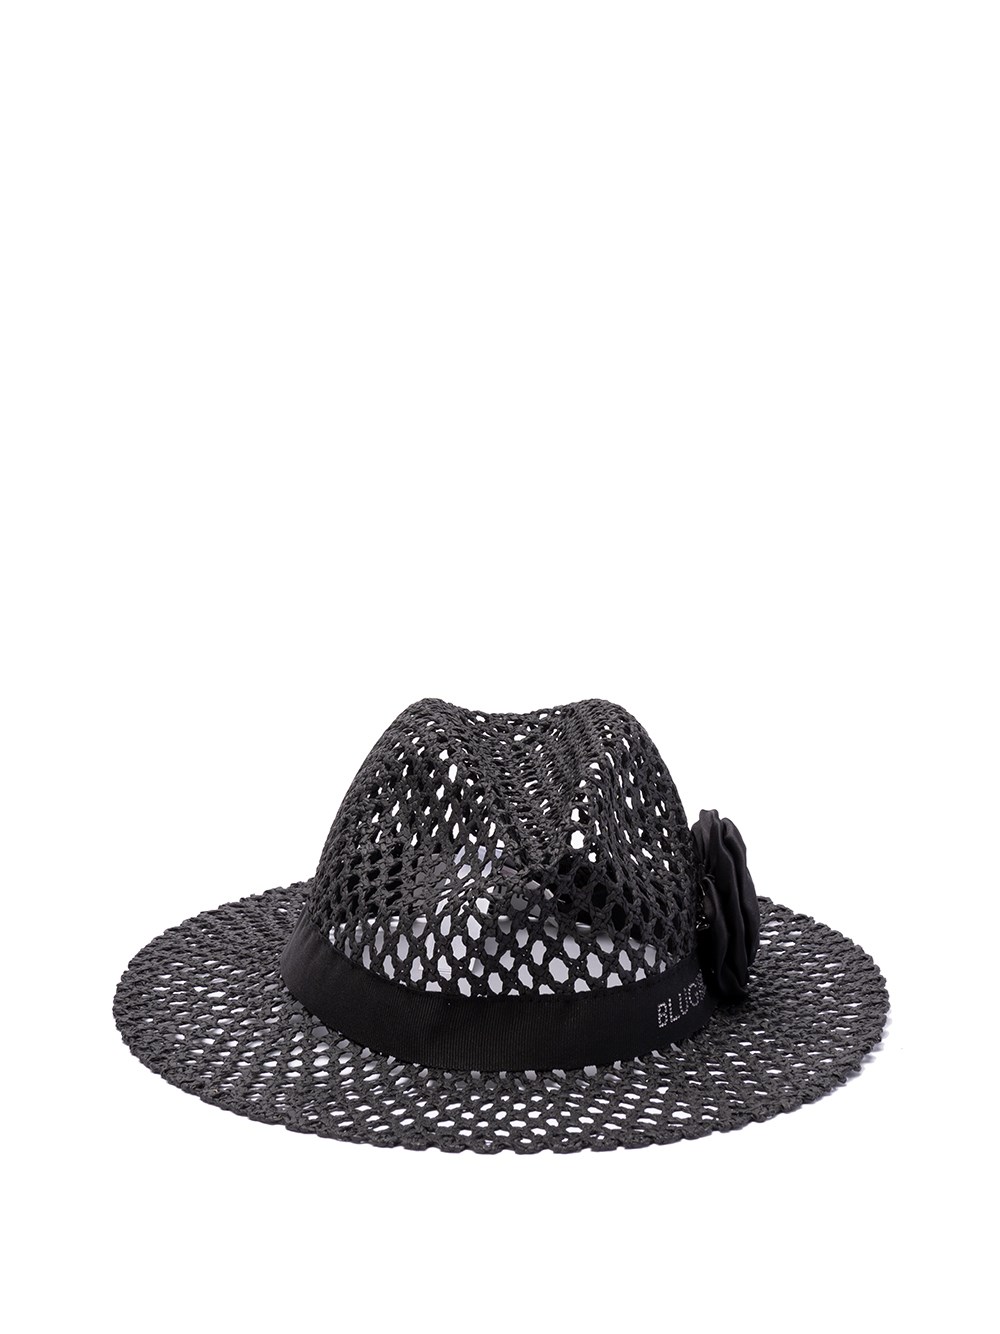 Blugirl Panama Hat With Rose In Black  